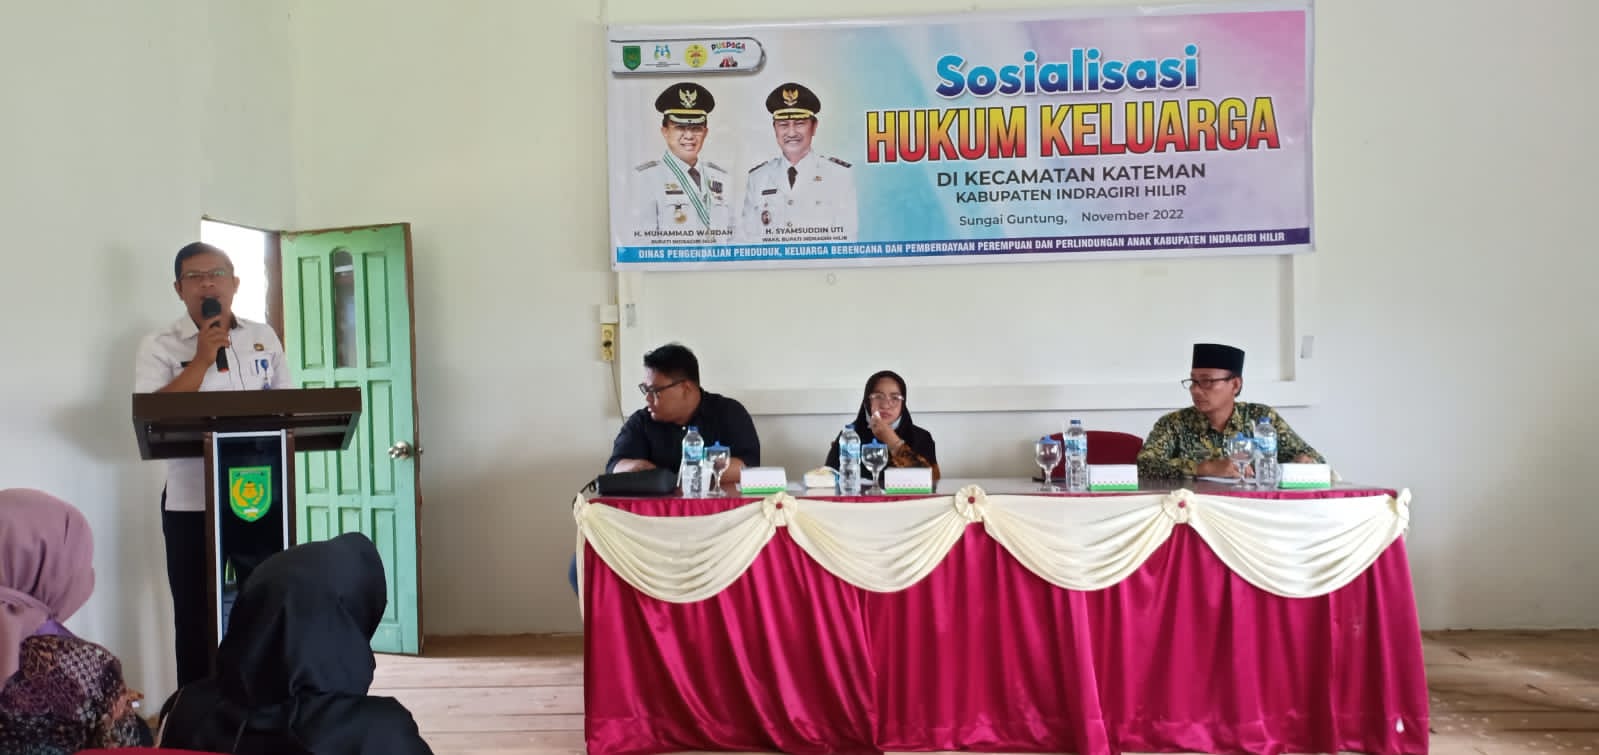 Dinas P2KBP3A Inhil Laksanakan Kegiatan Sosialisasi Hukum Keluarga Di Kecamatan Kateman